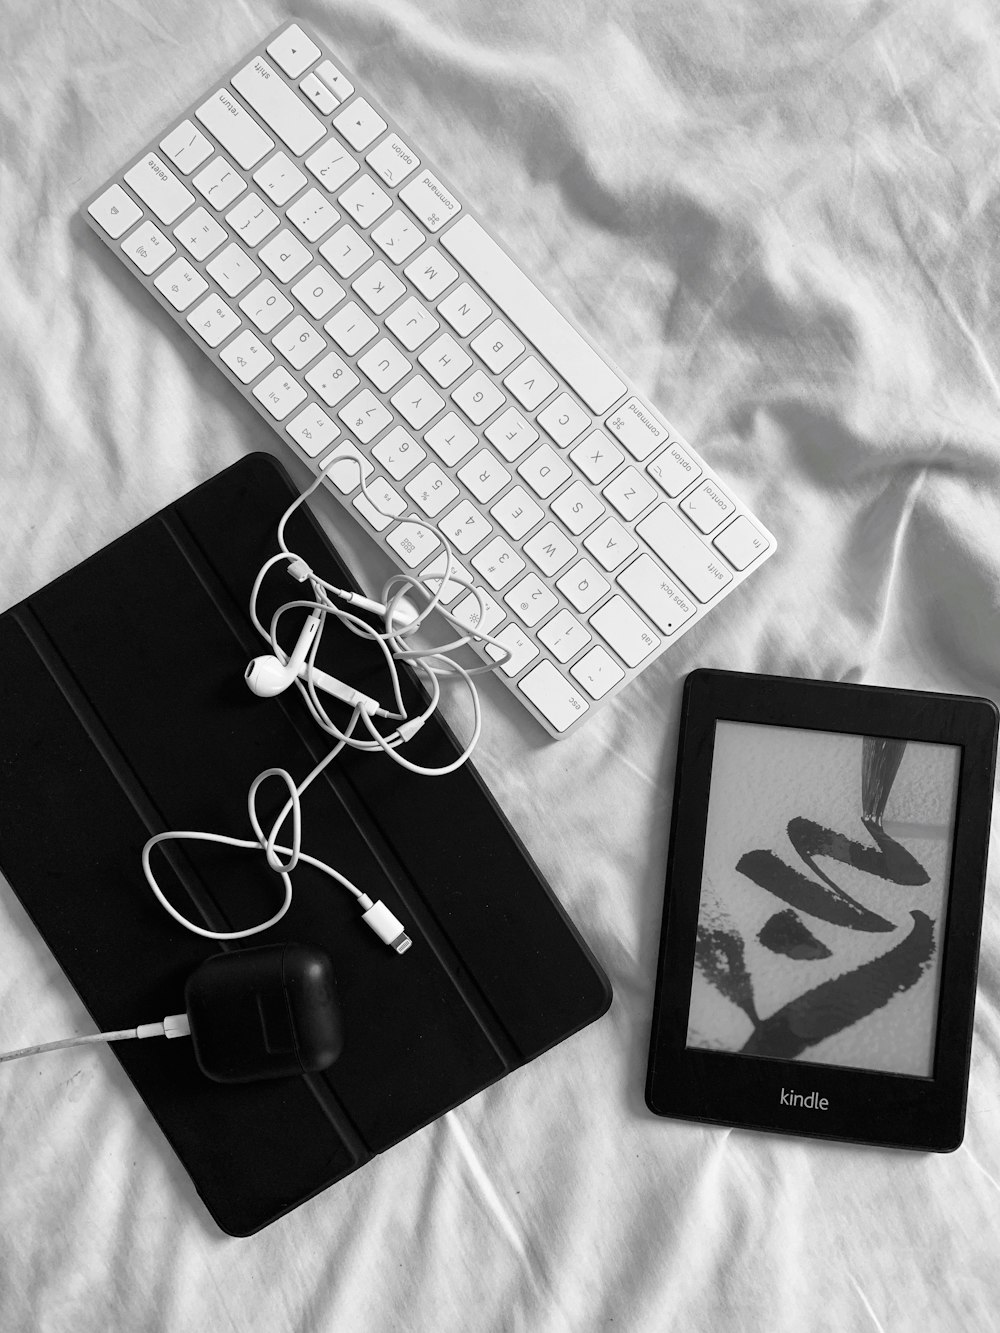 black ipad beside apple keyboard and apple earpods on white textile